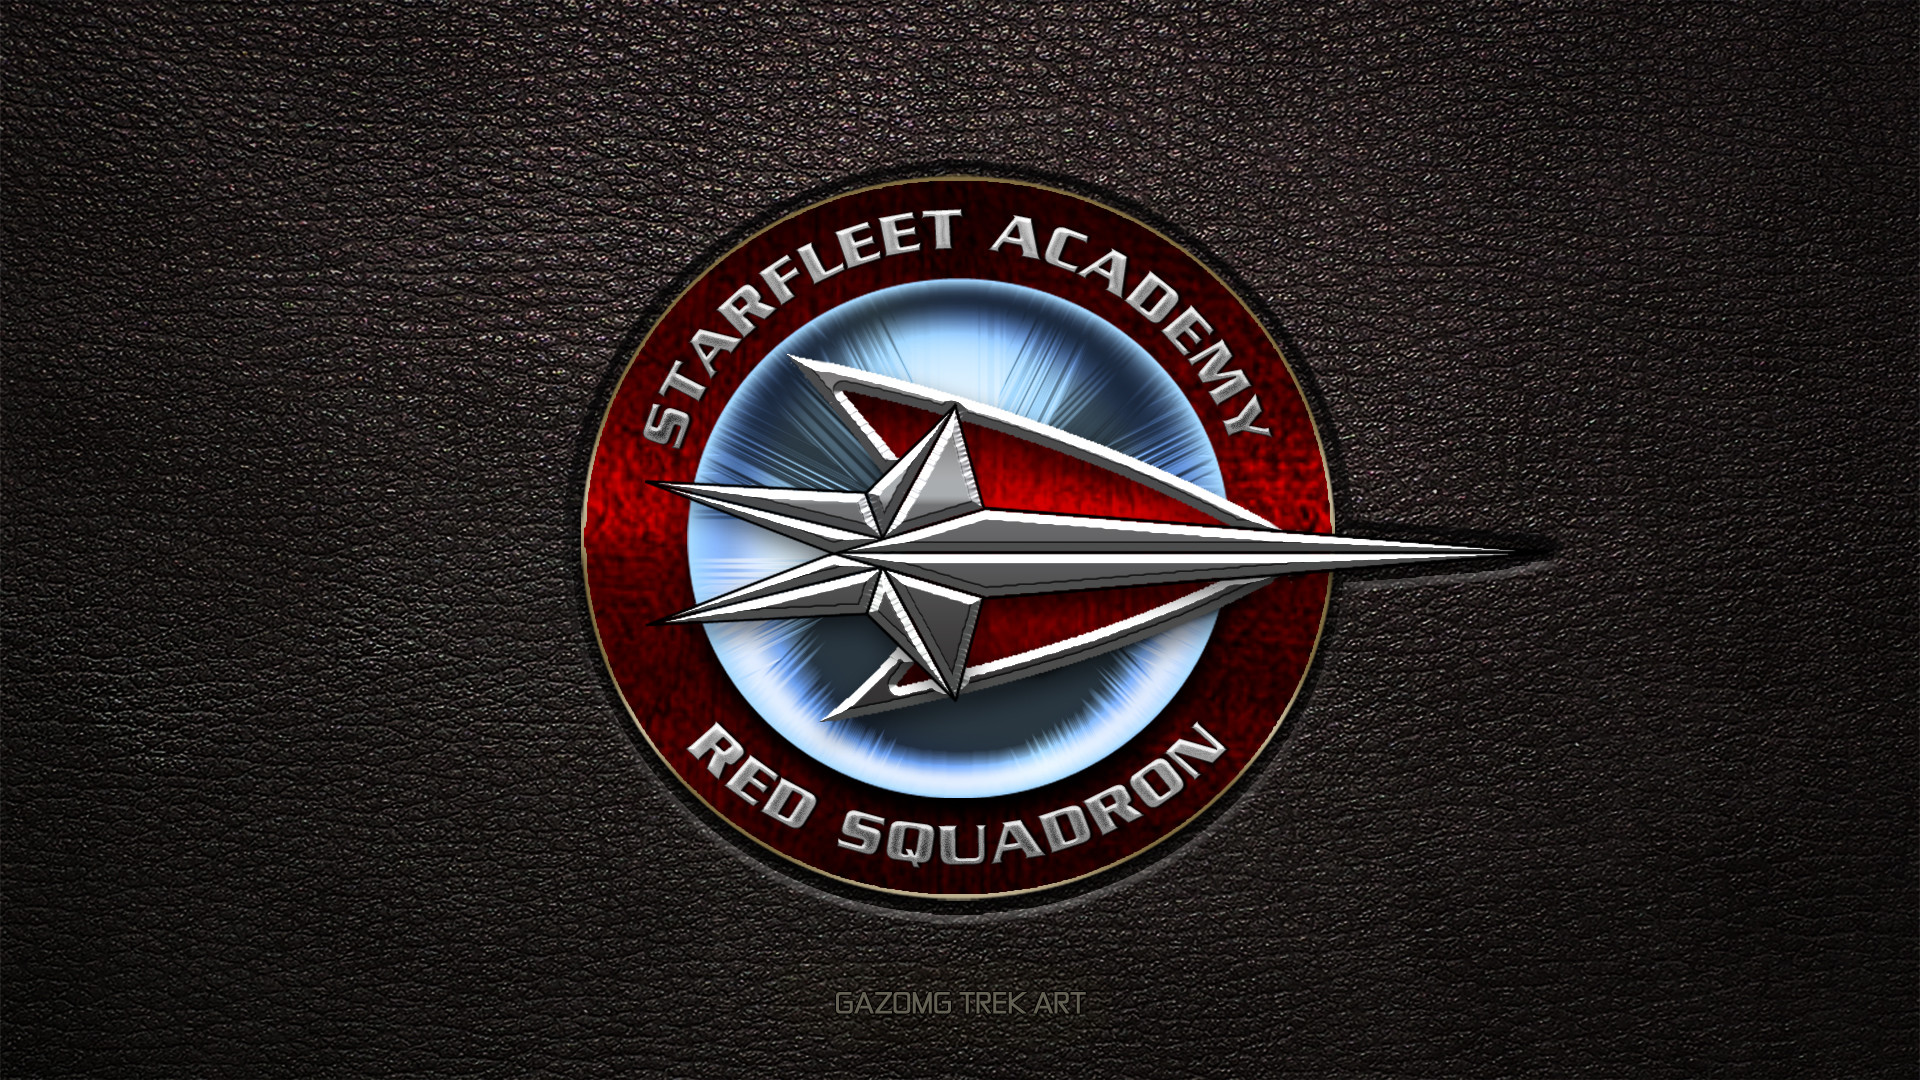 1920x1080 Starfleet Academy Red Squadron Star Trek Logo by gazomg on .